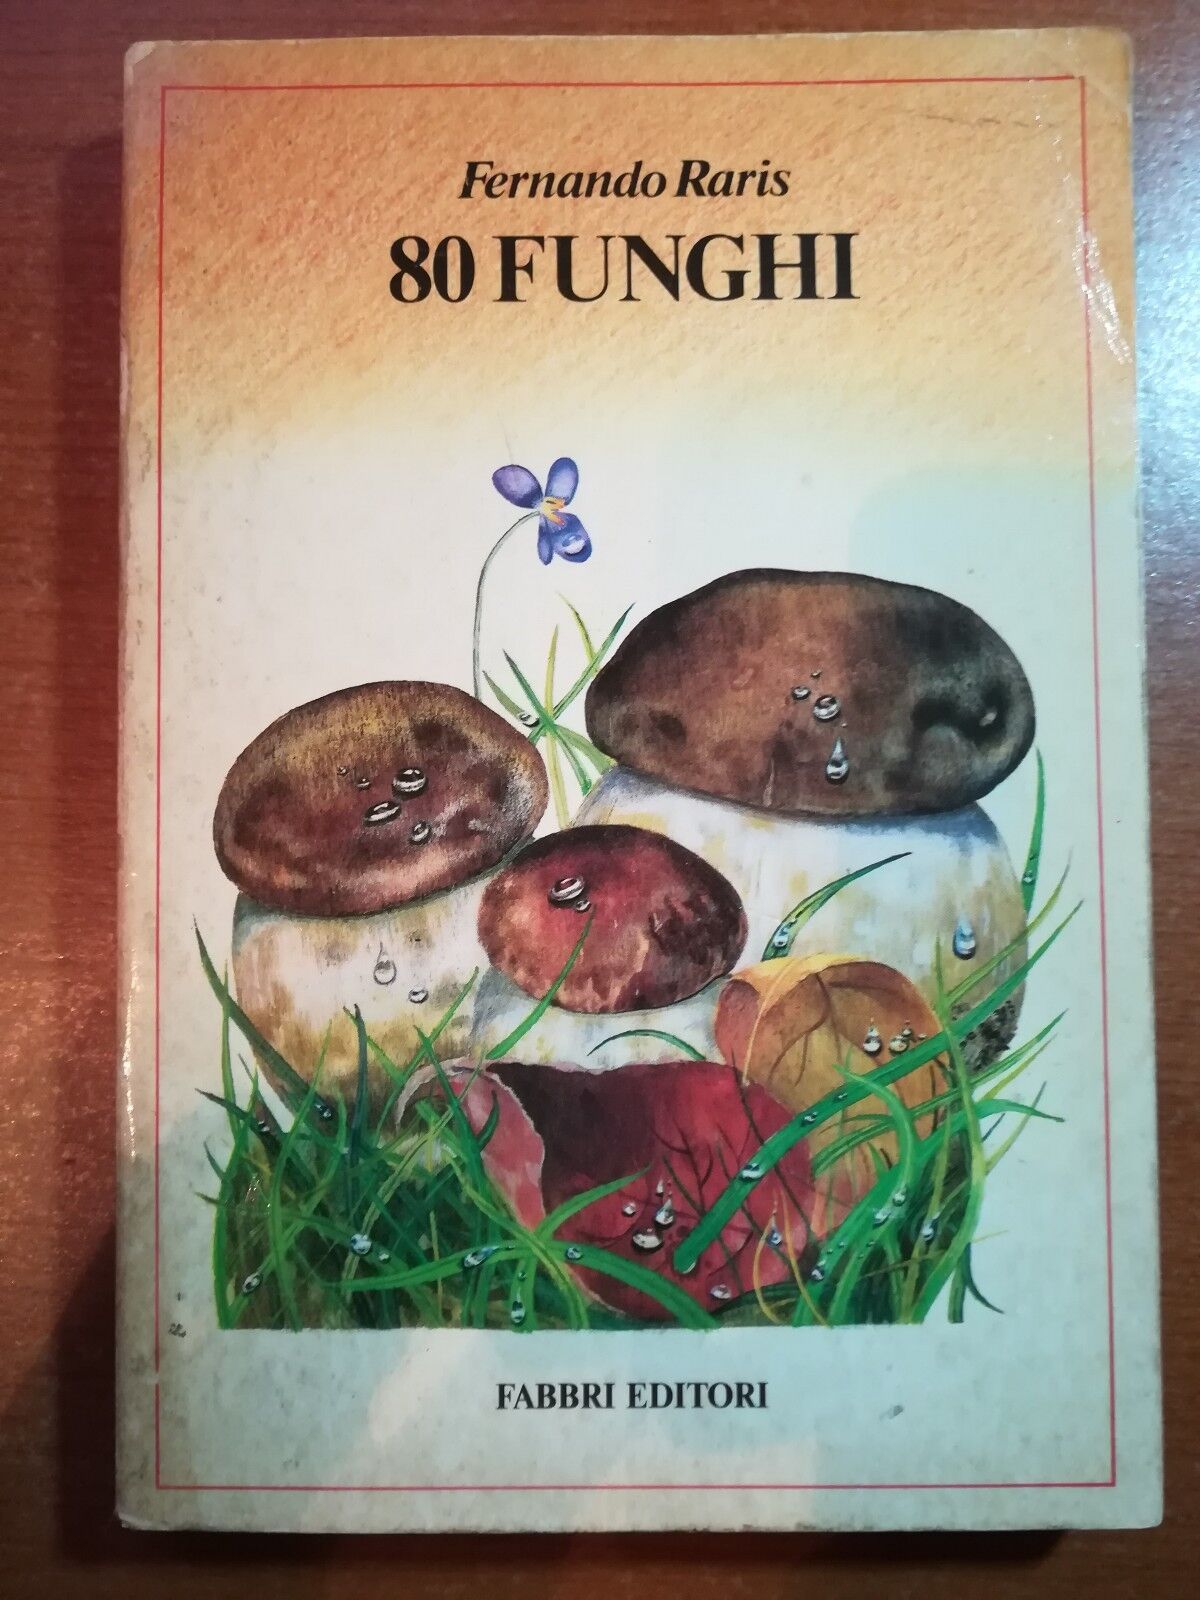 80 funghi - Fernando Raris - Fabbri - 1980  - M